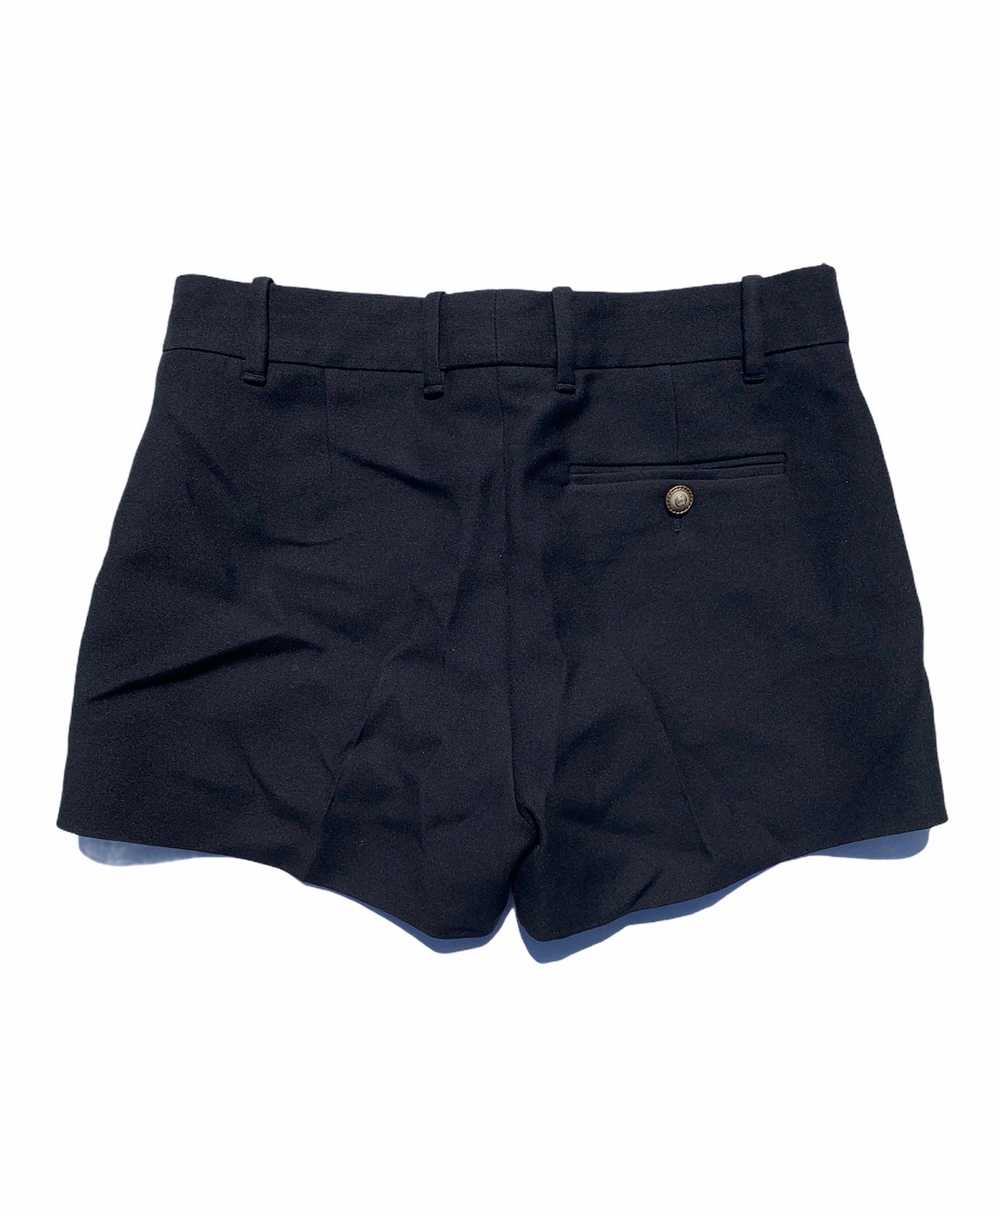 Gucci Black Silk-Wool Tailored Shorts - image 3